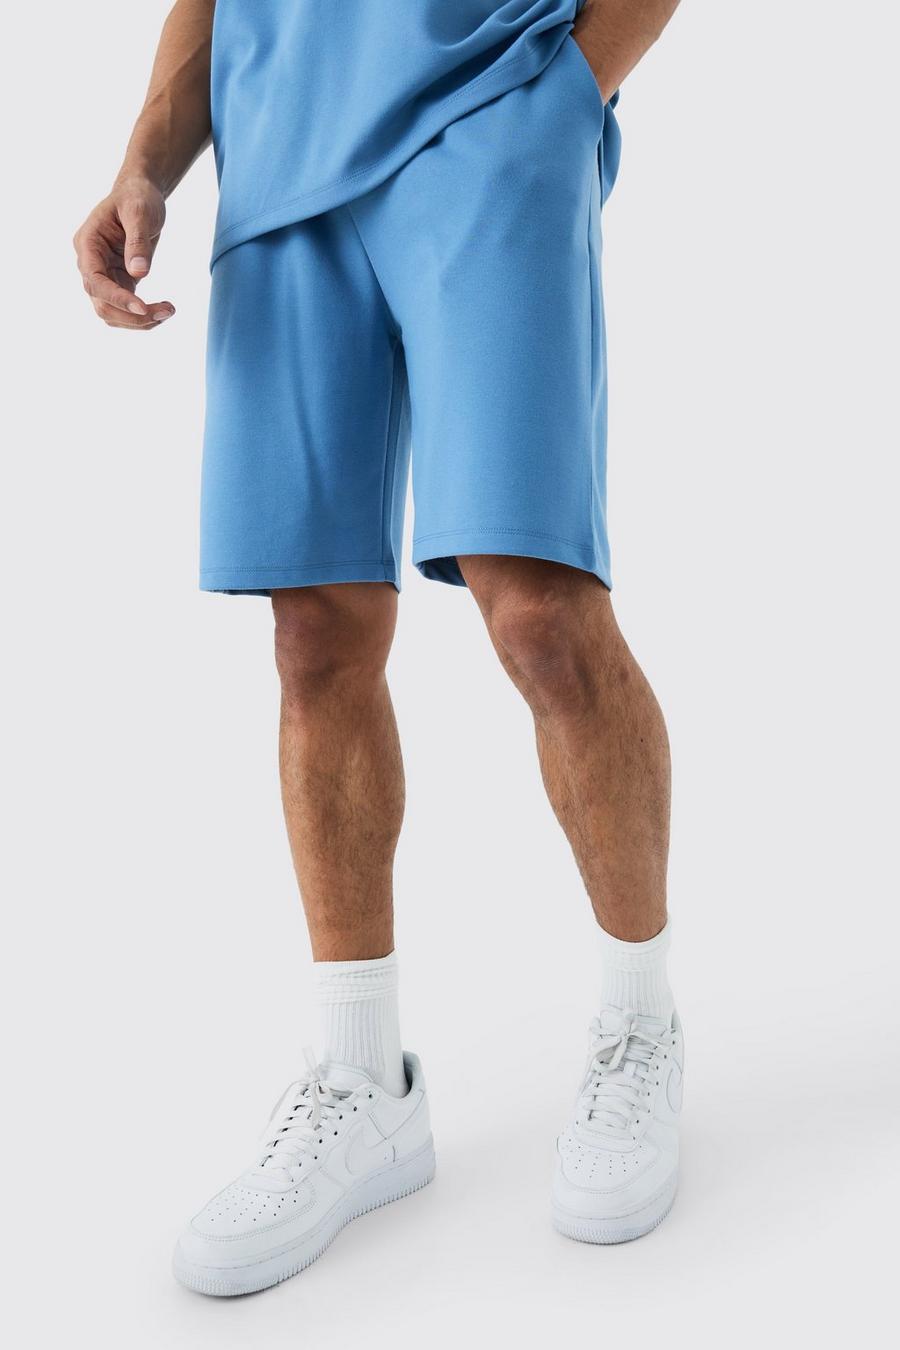 Lockere mittellange Premium Shorts, Slate blue